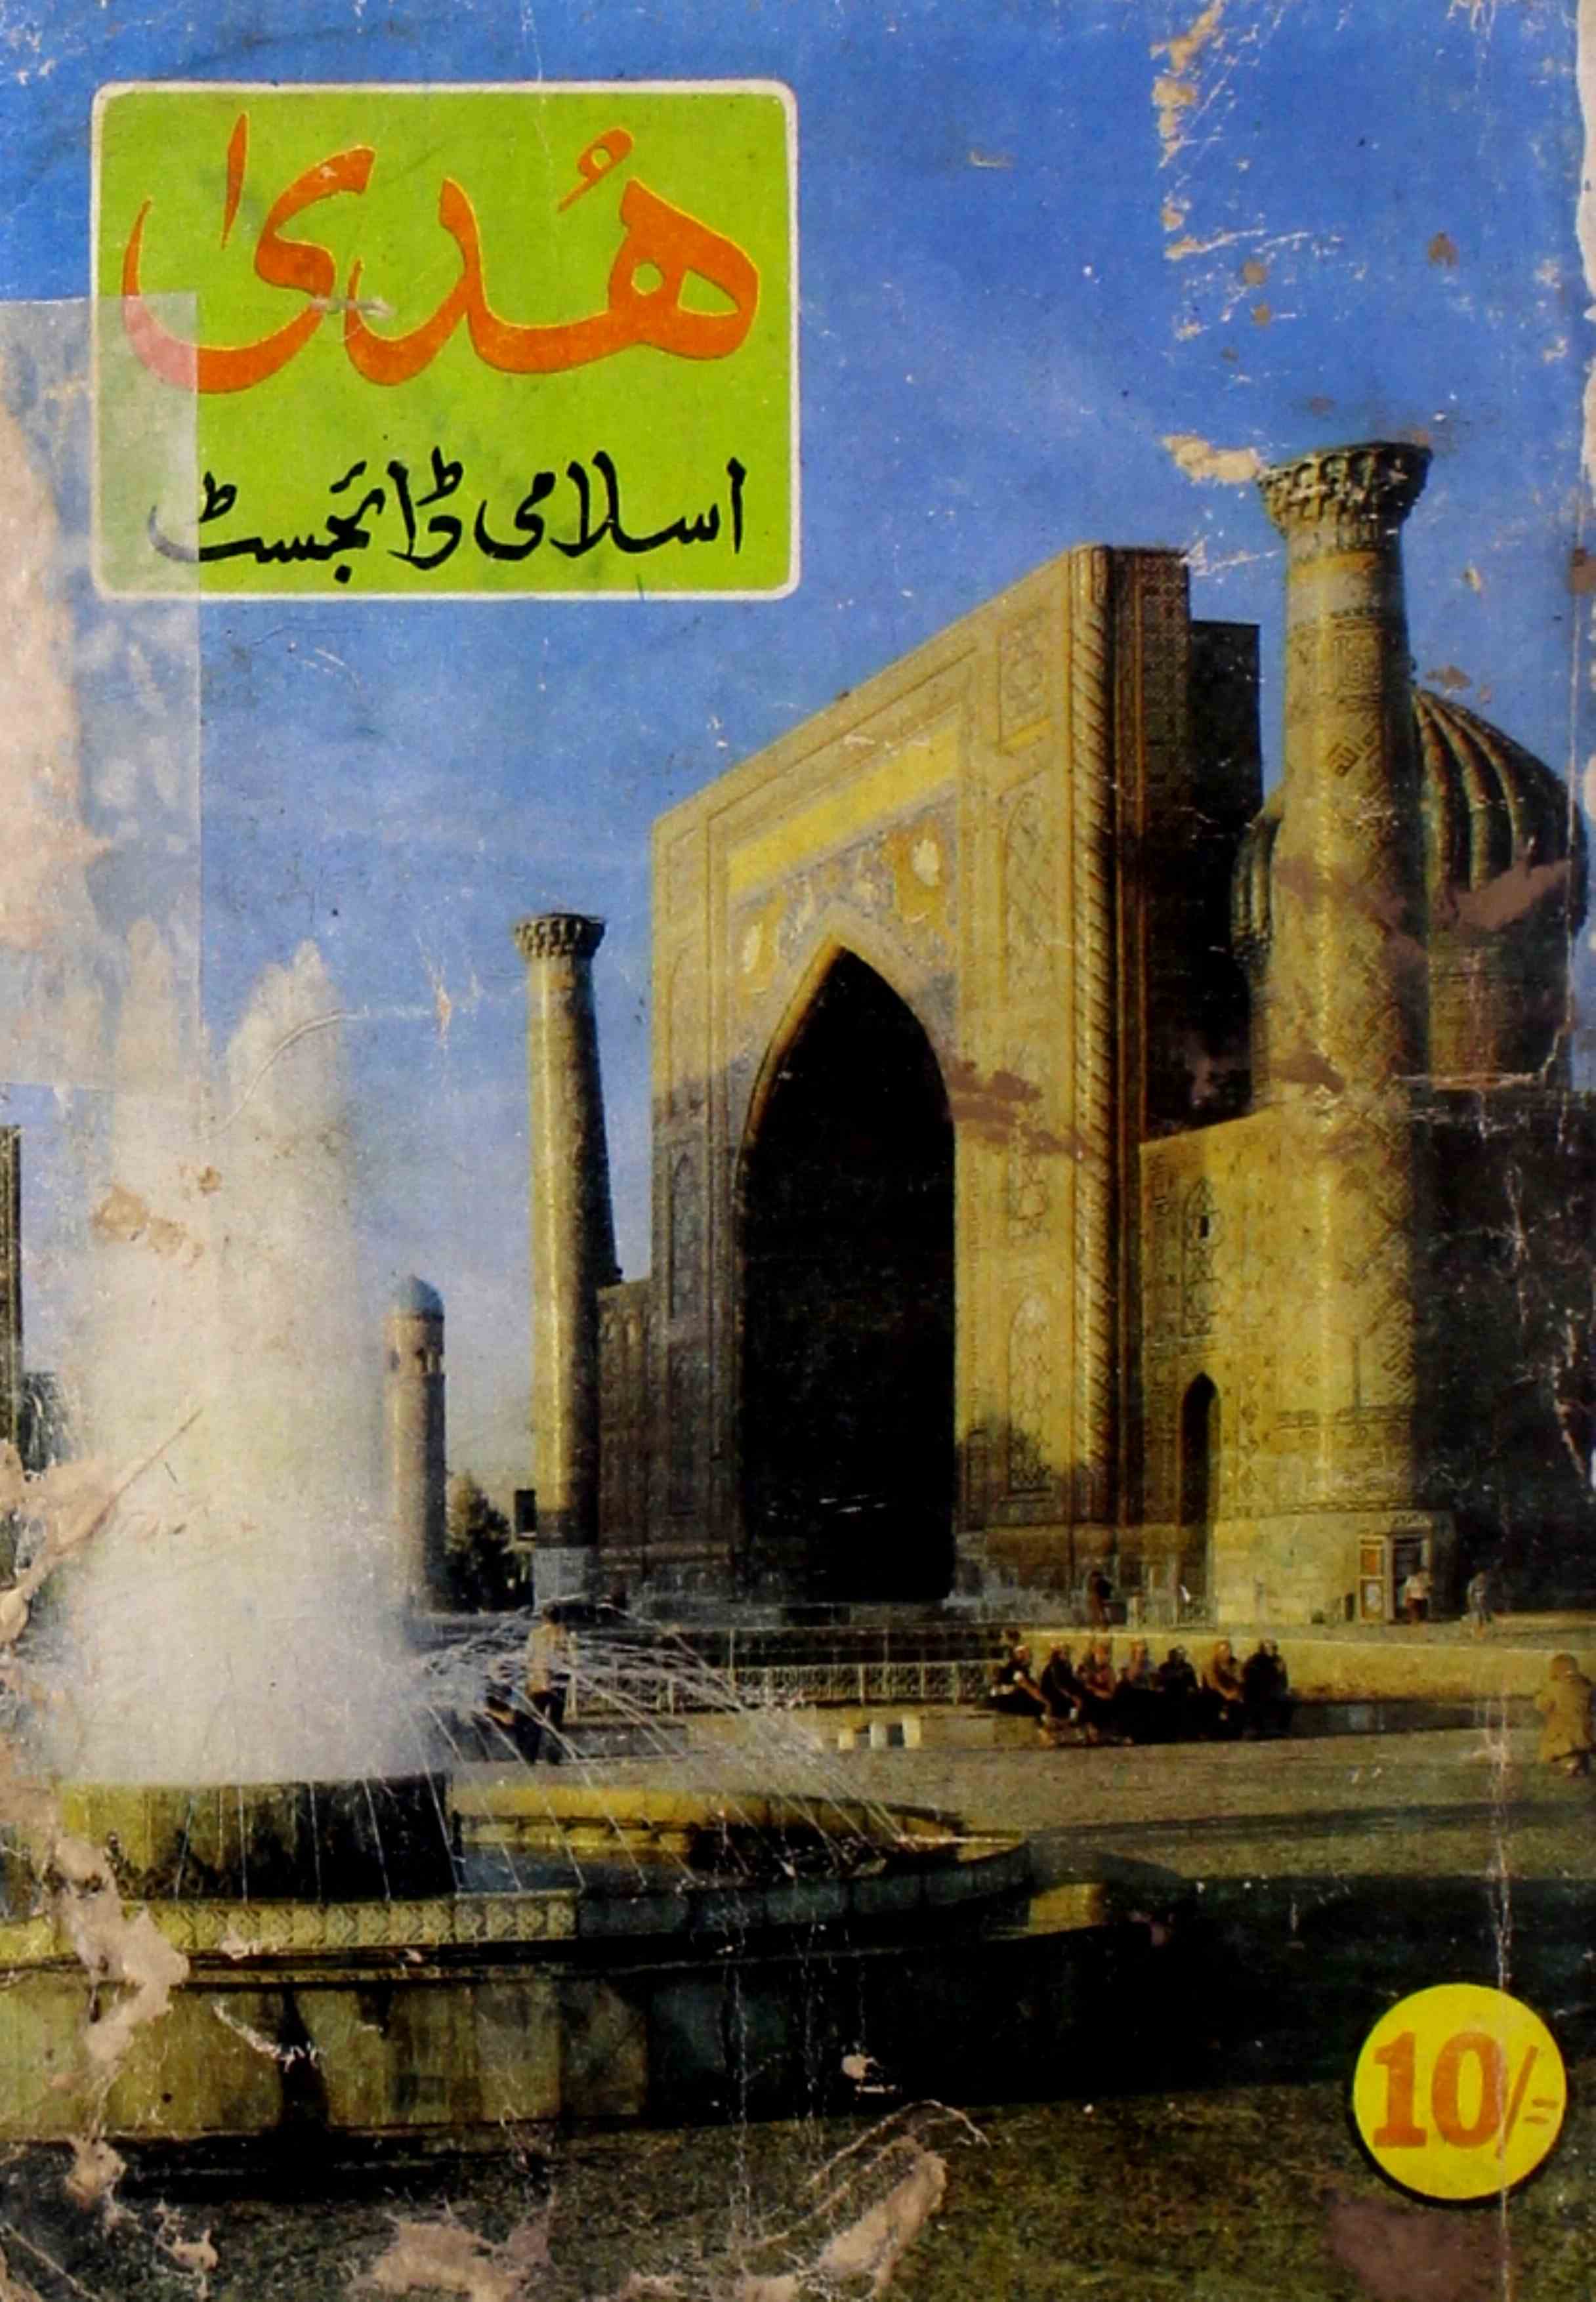 Huda Islami  Digest  Jild.23 Shumara No.275 Feb-1991-SVK-Shumara Number-275